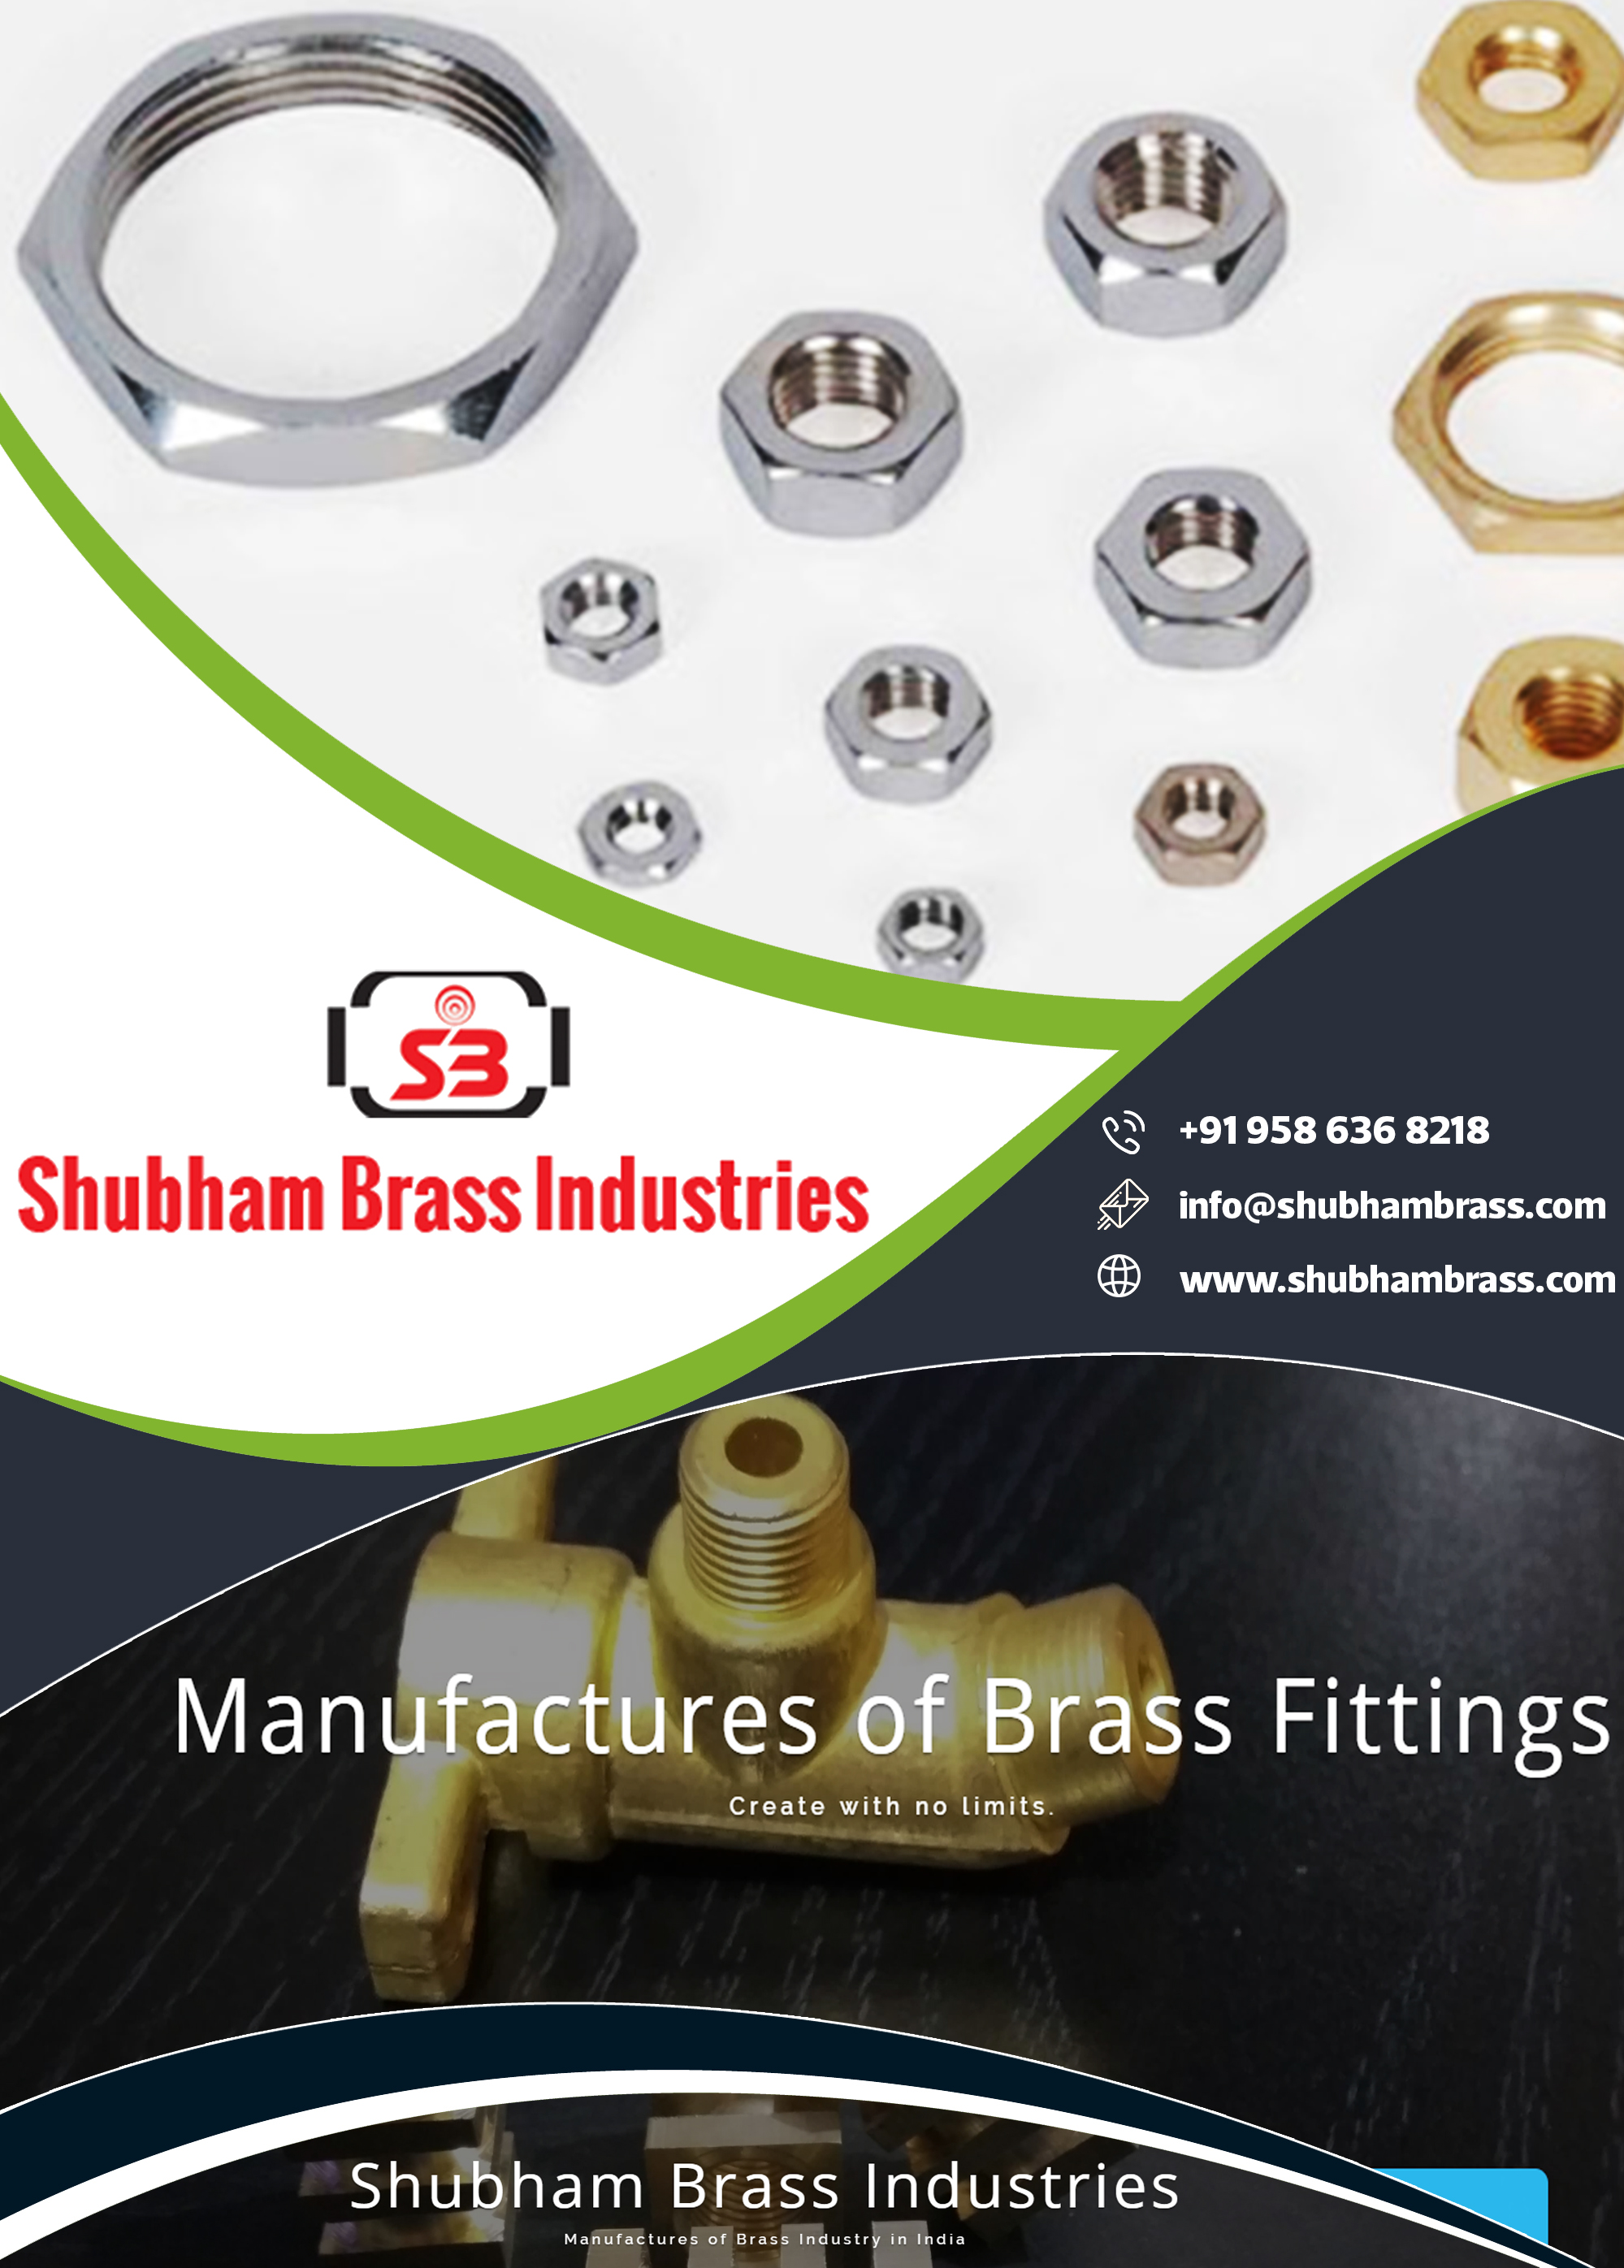 Shubham Brass Industries